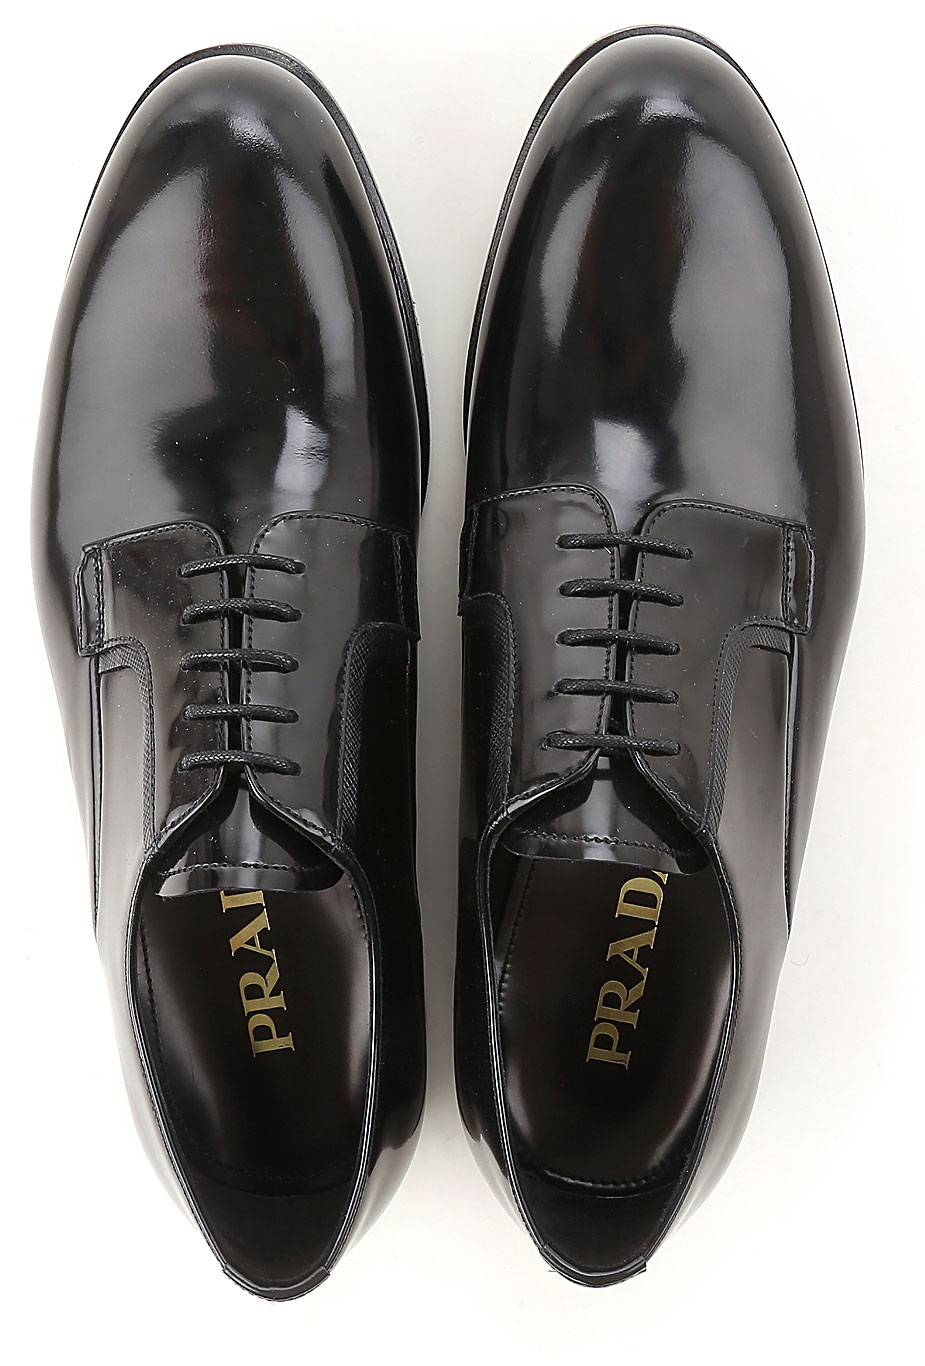 Mens Shoes Prada, Style code: 2ee207-x60-f0002